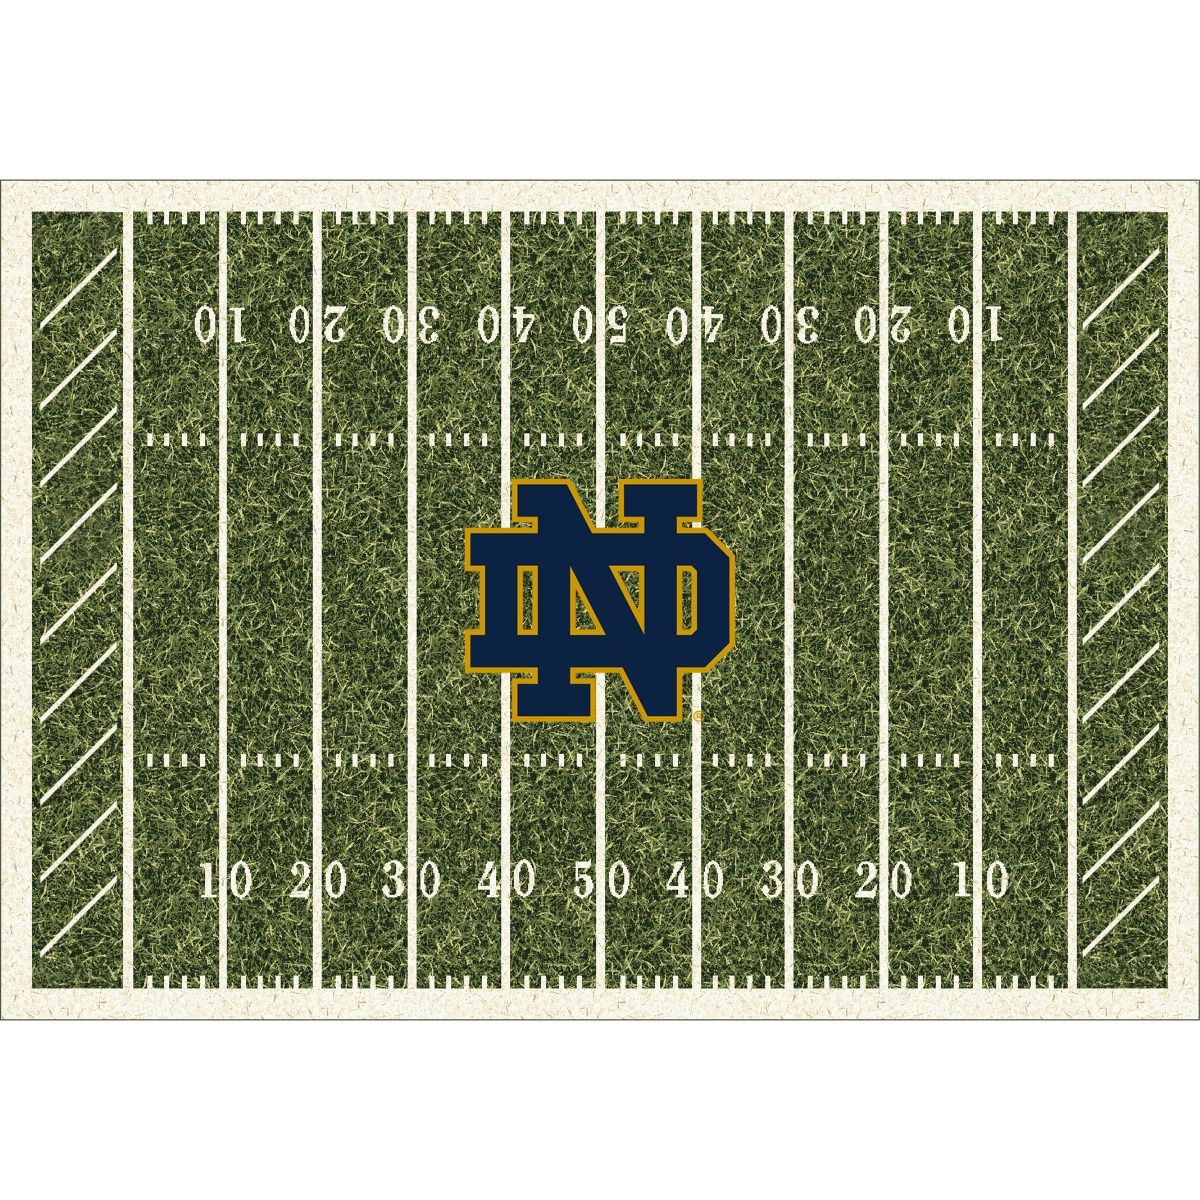 Notre Dame University Football Field Rug